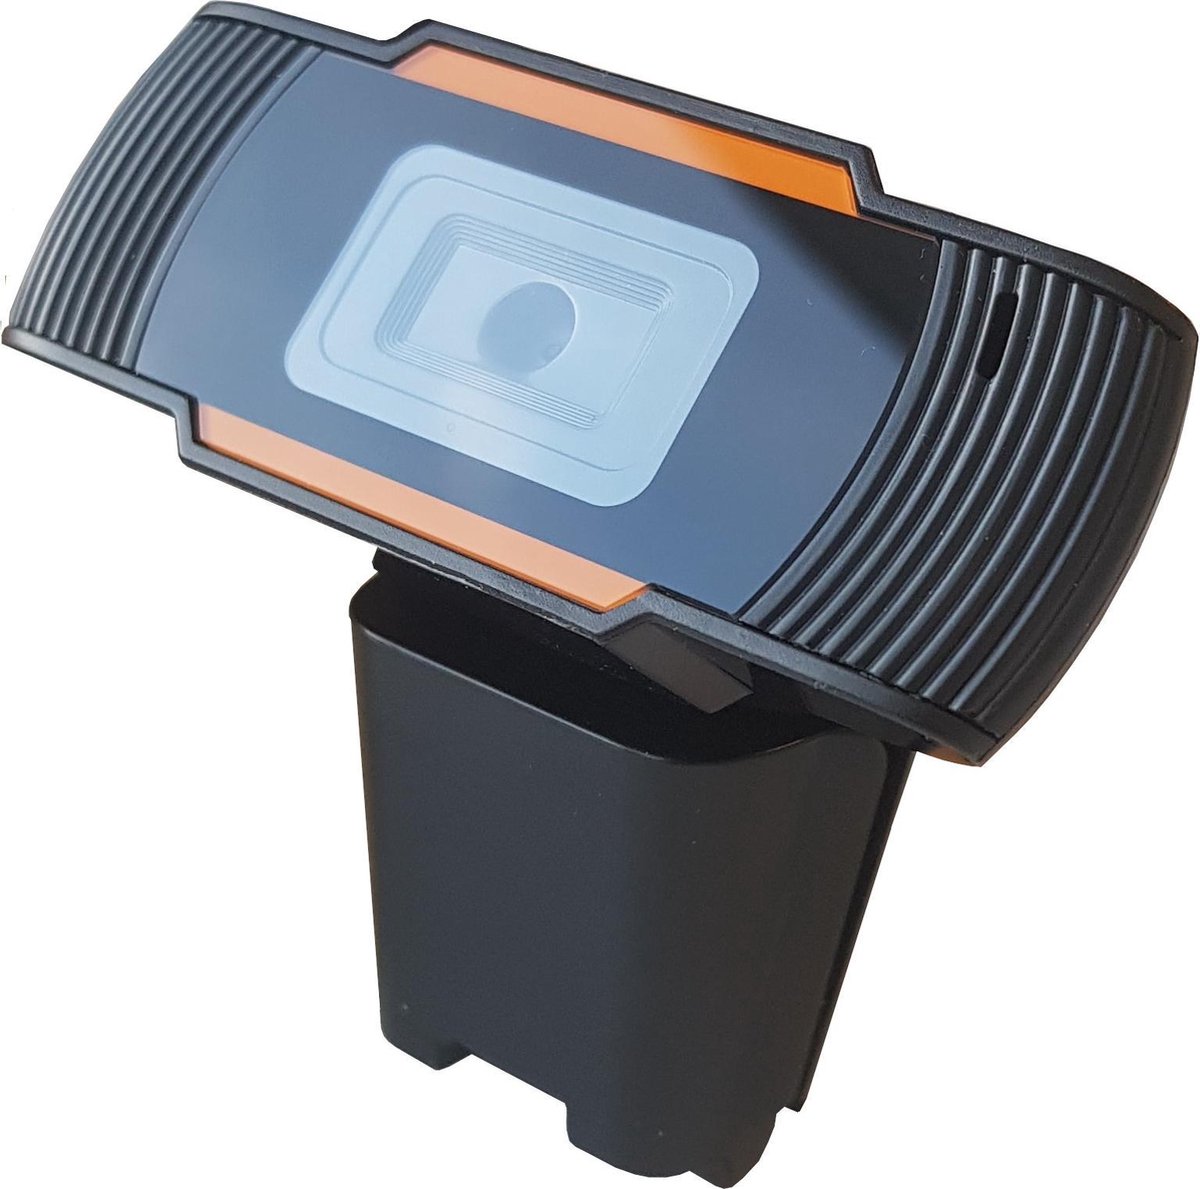 NÖRDIC WEBCAM-1080, Webcam met microfoon voor PC, laptop, Webcamera HD 1080p, zwart/oranje